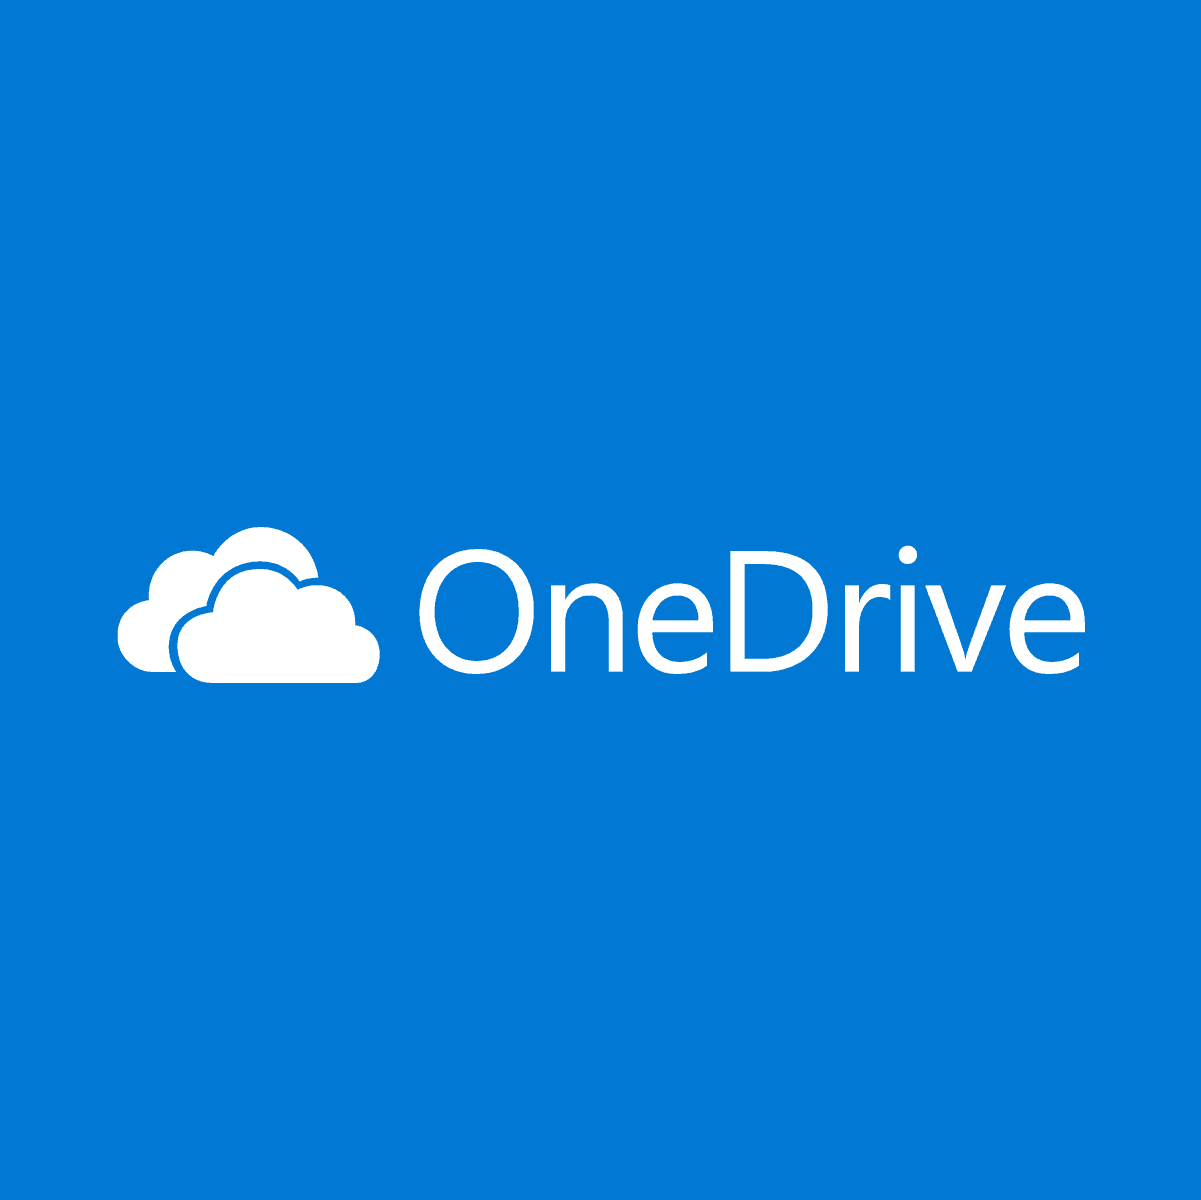 OneDrive Subscription plans